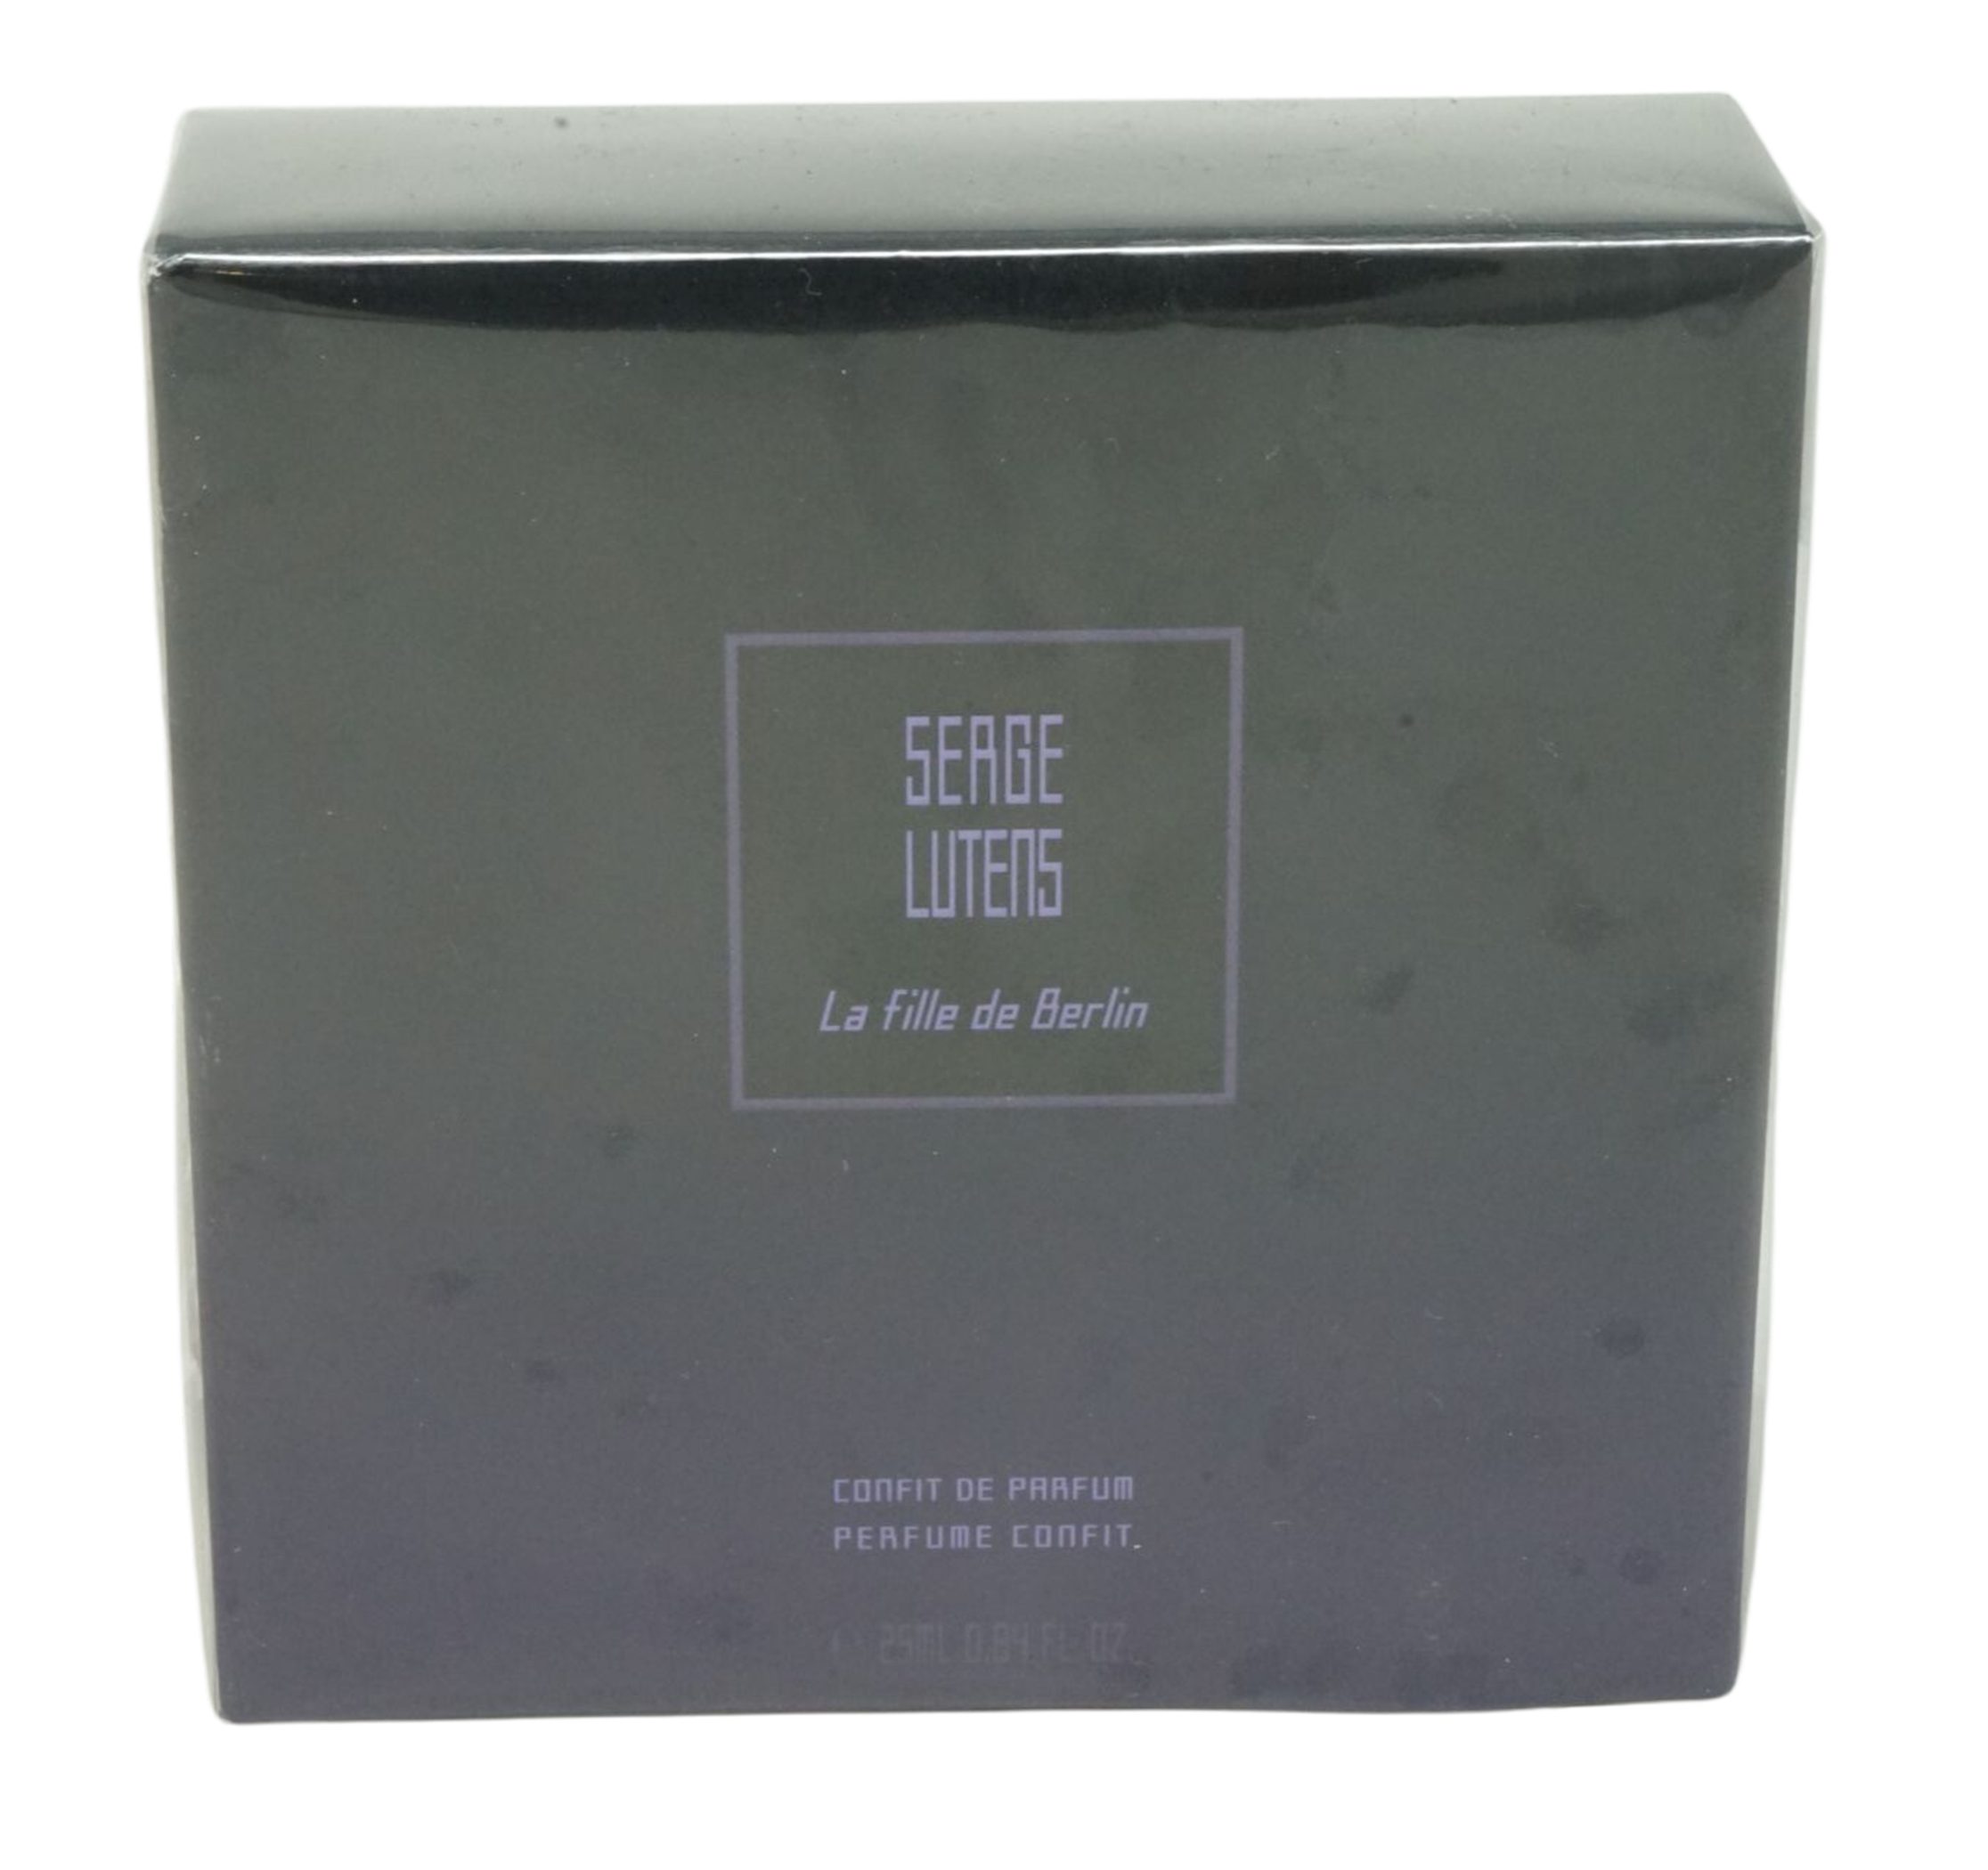 SERGE LUTENS Eau de Parfum Serge Lutens La Fille de Berlin Perfume Confit 25ml